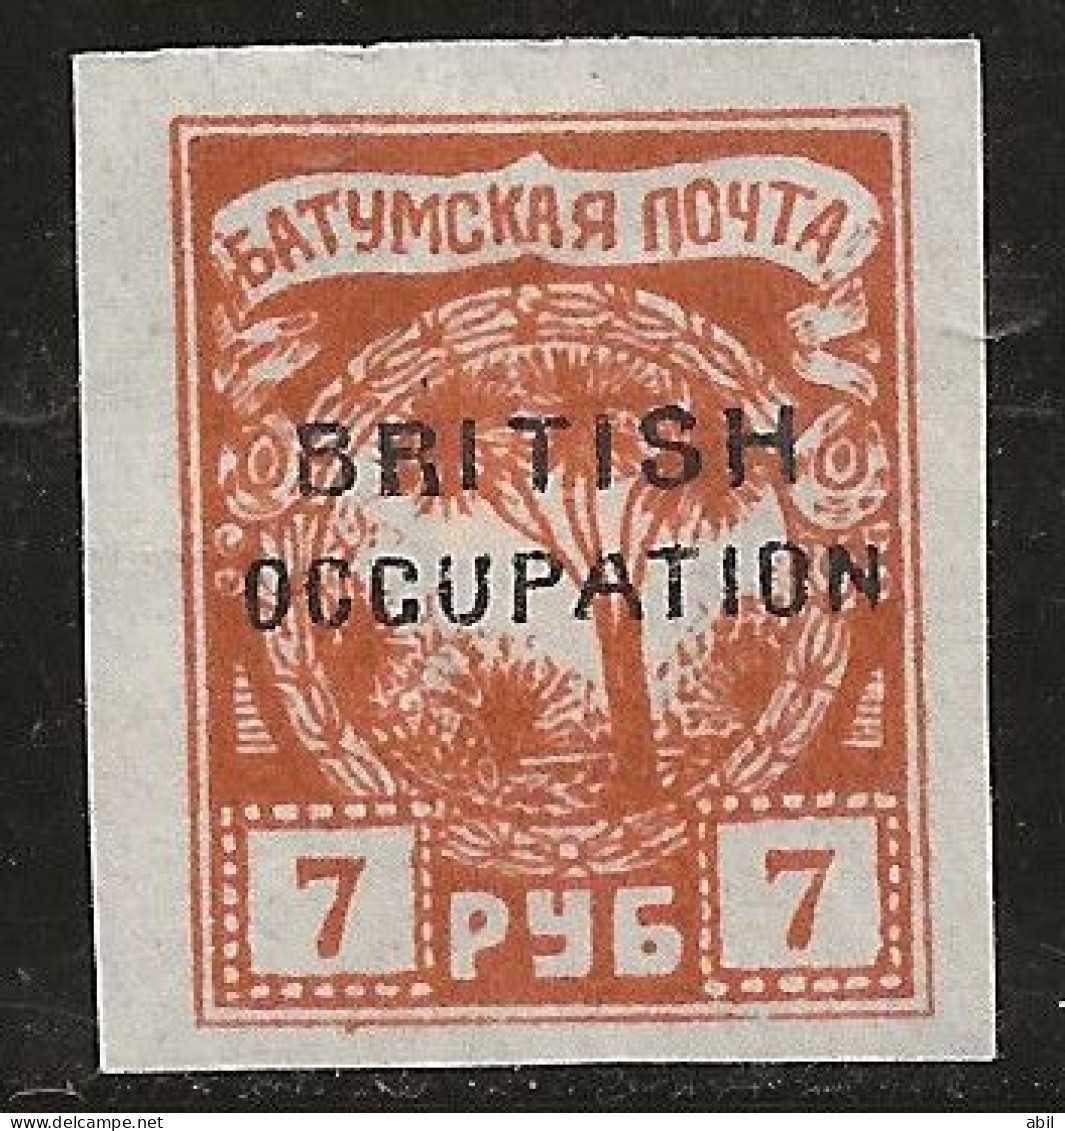 Russie 1919 N° Y&T : Batoum 14 * - 1919-20 Occupation: Great Britain